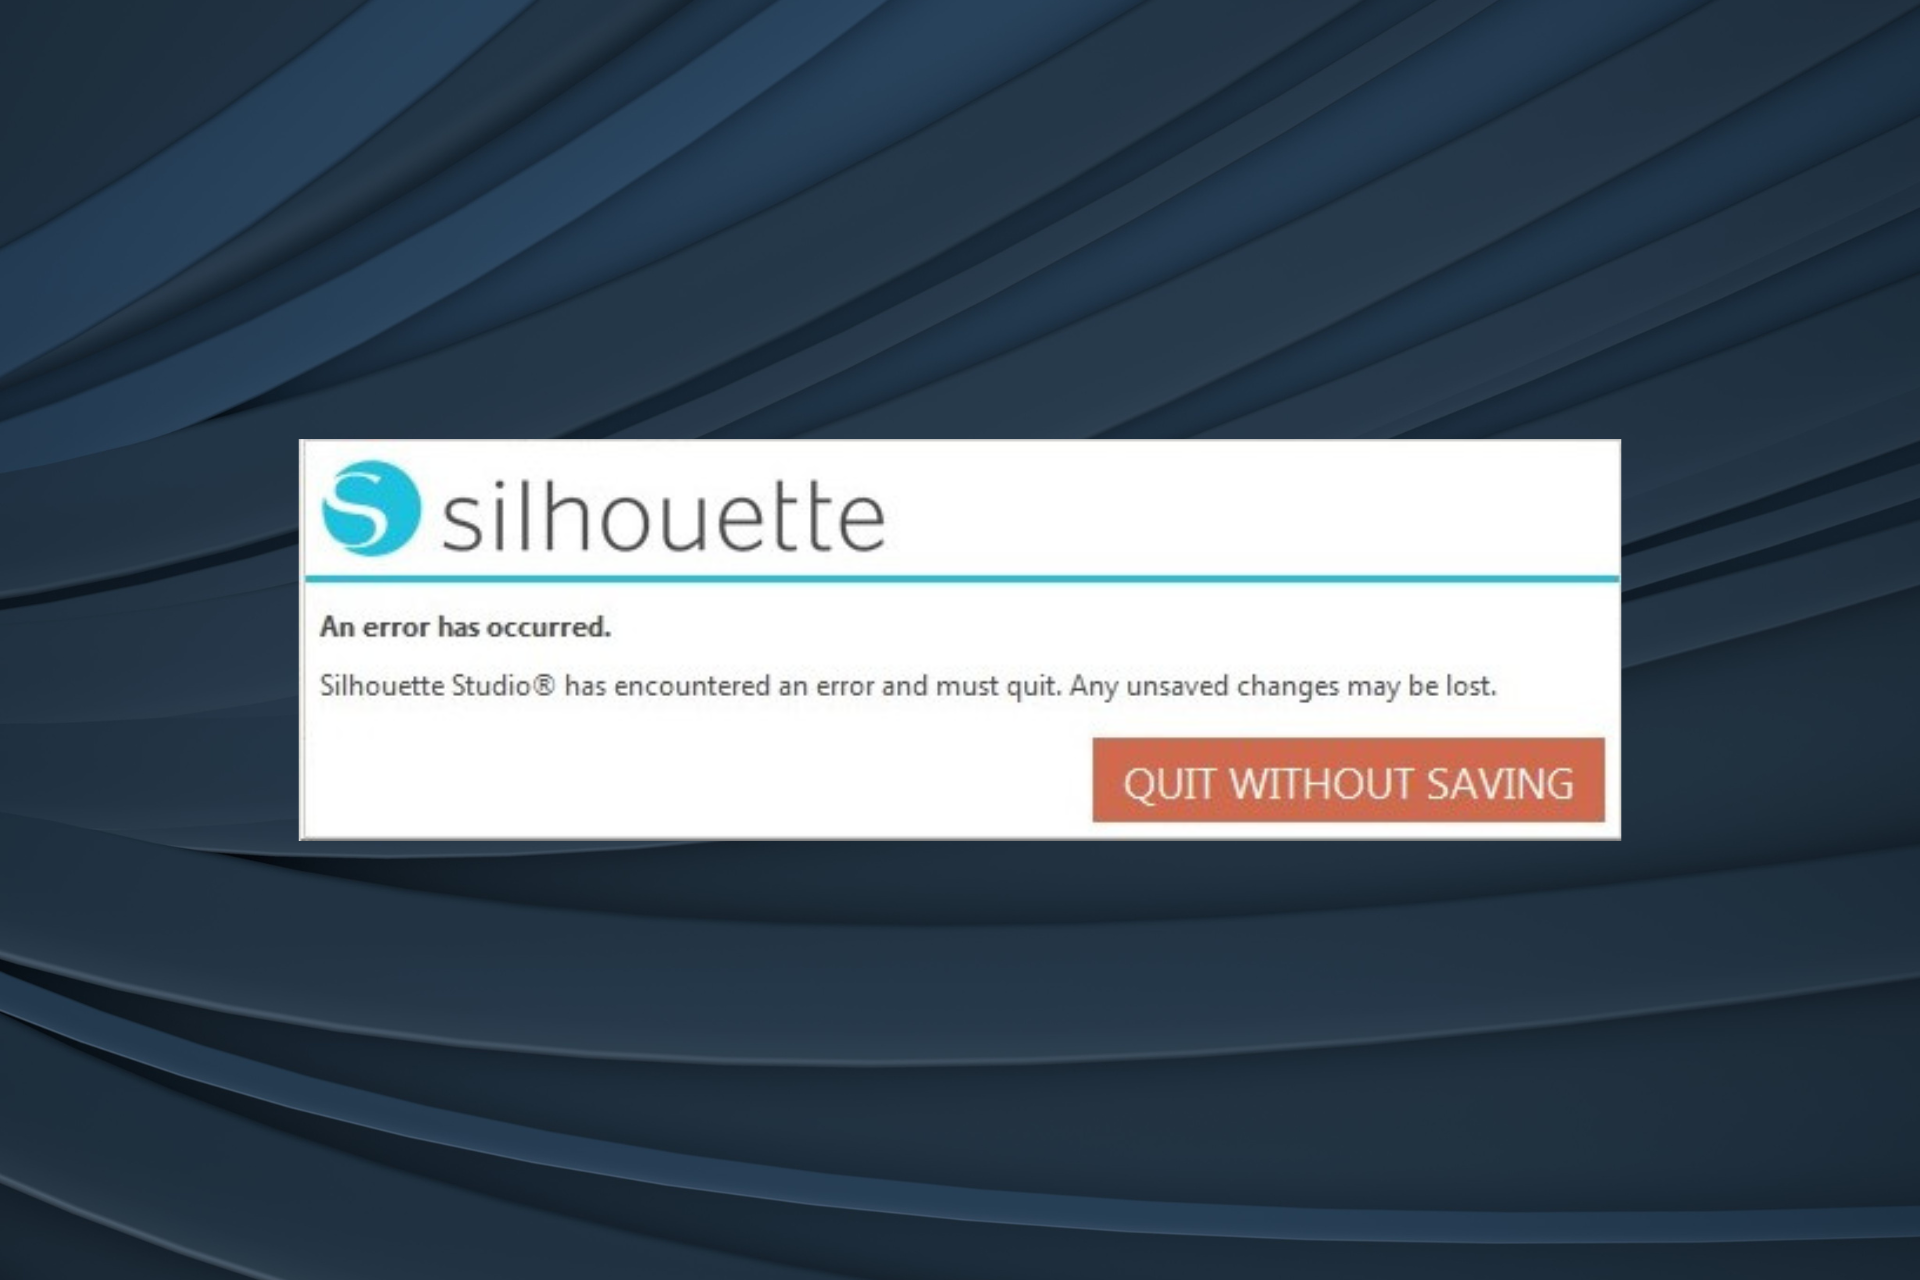 fix silhouette studio has encountered an error and must quit error in Windows